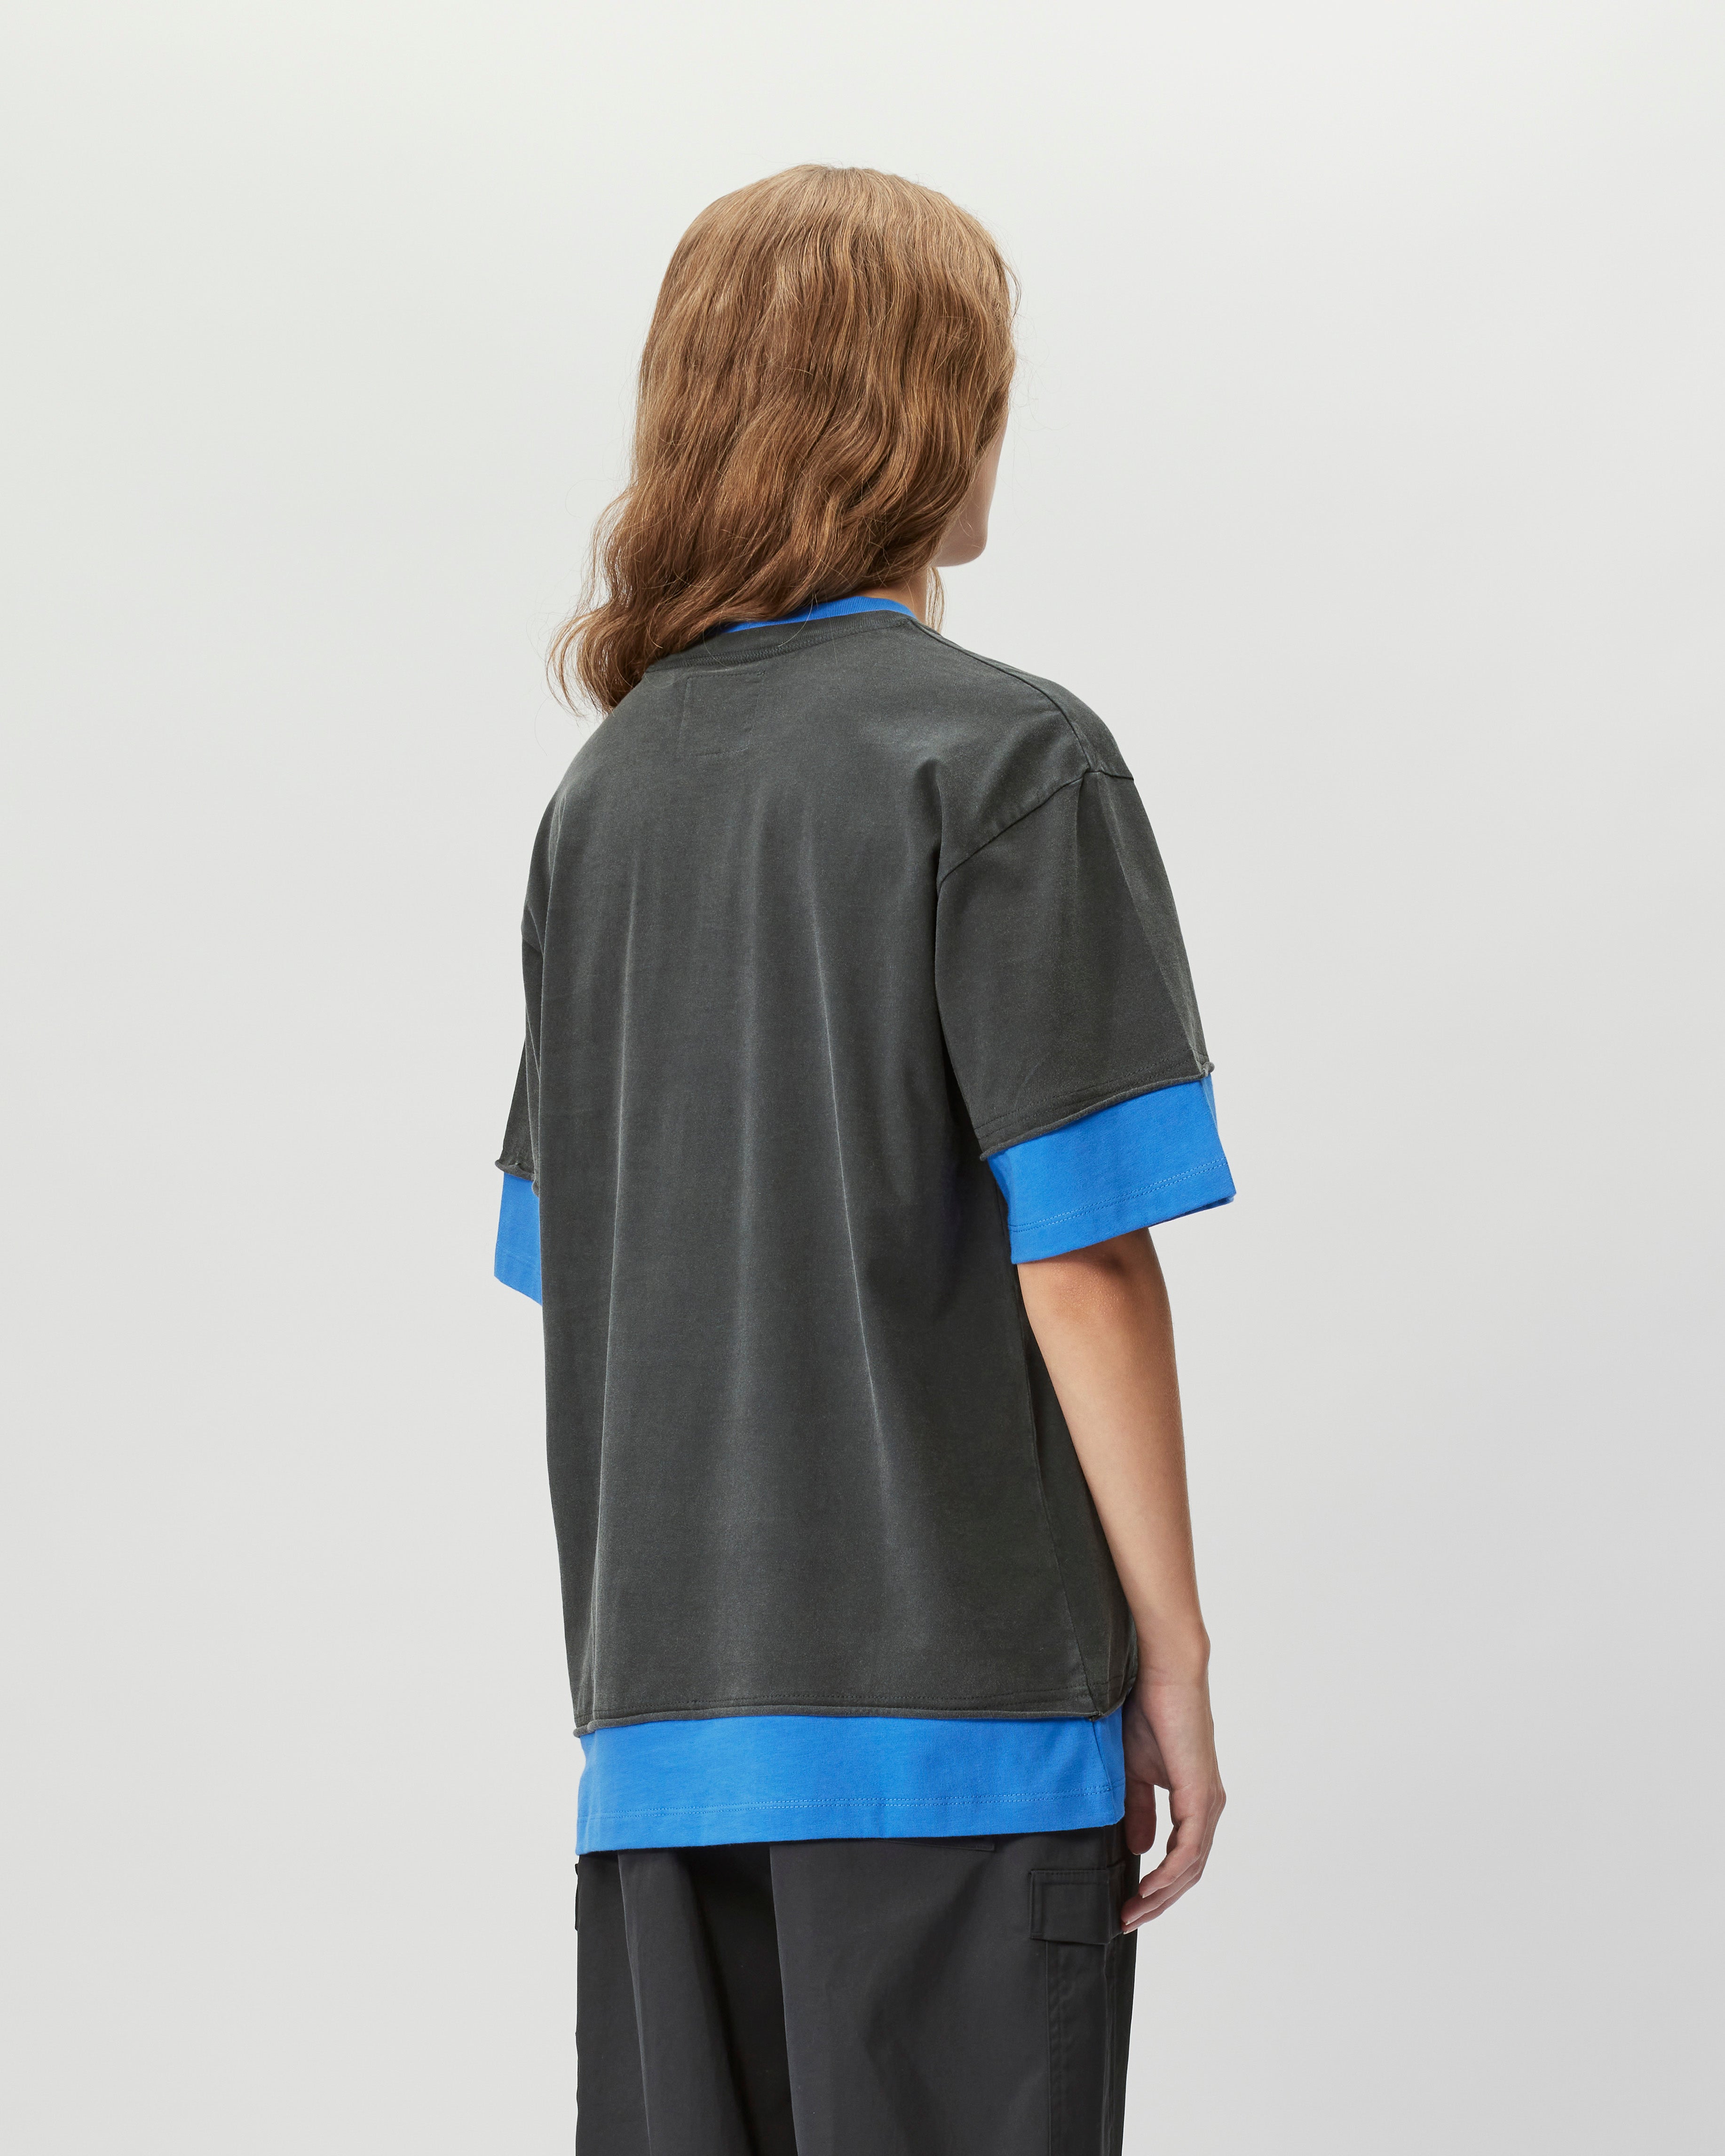 (DI)VISION Layered T-shirt BLACK / BLUE COMB. 050004-1